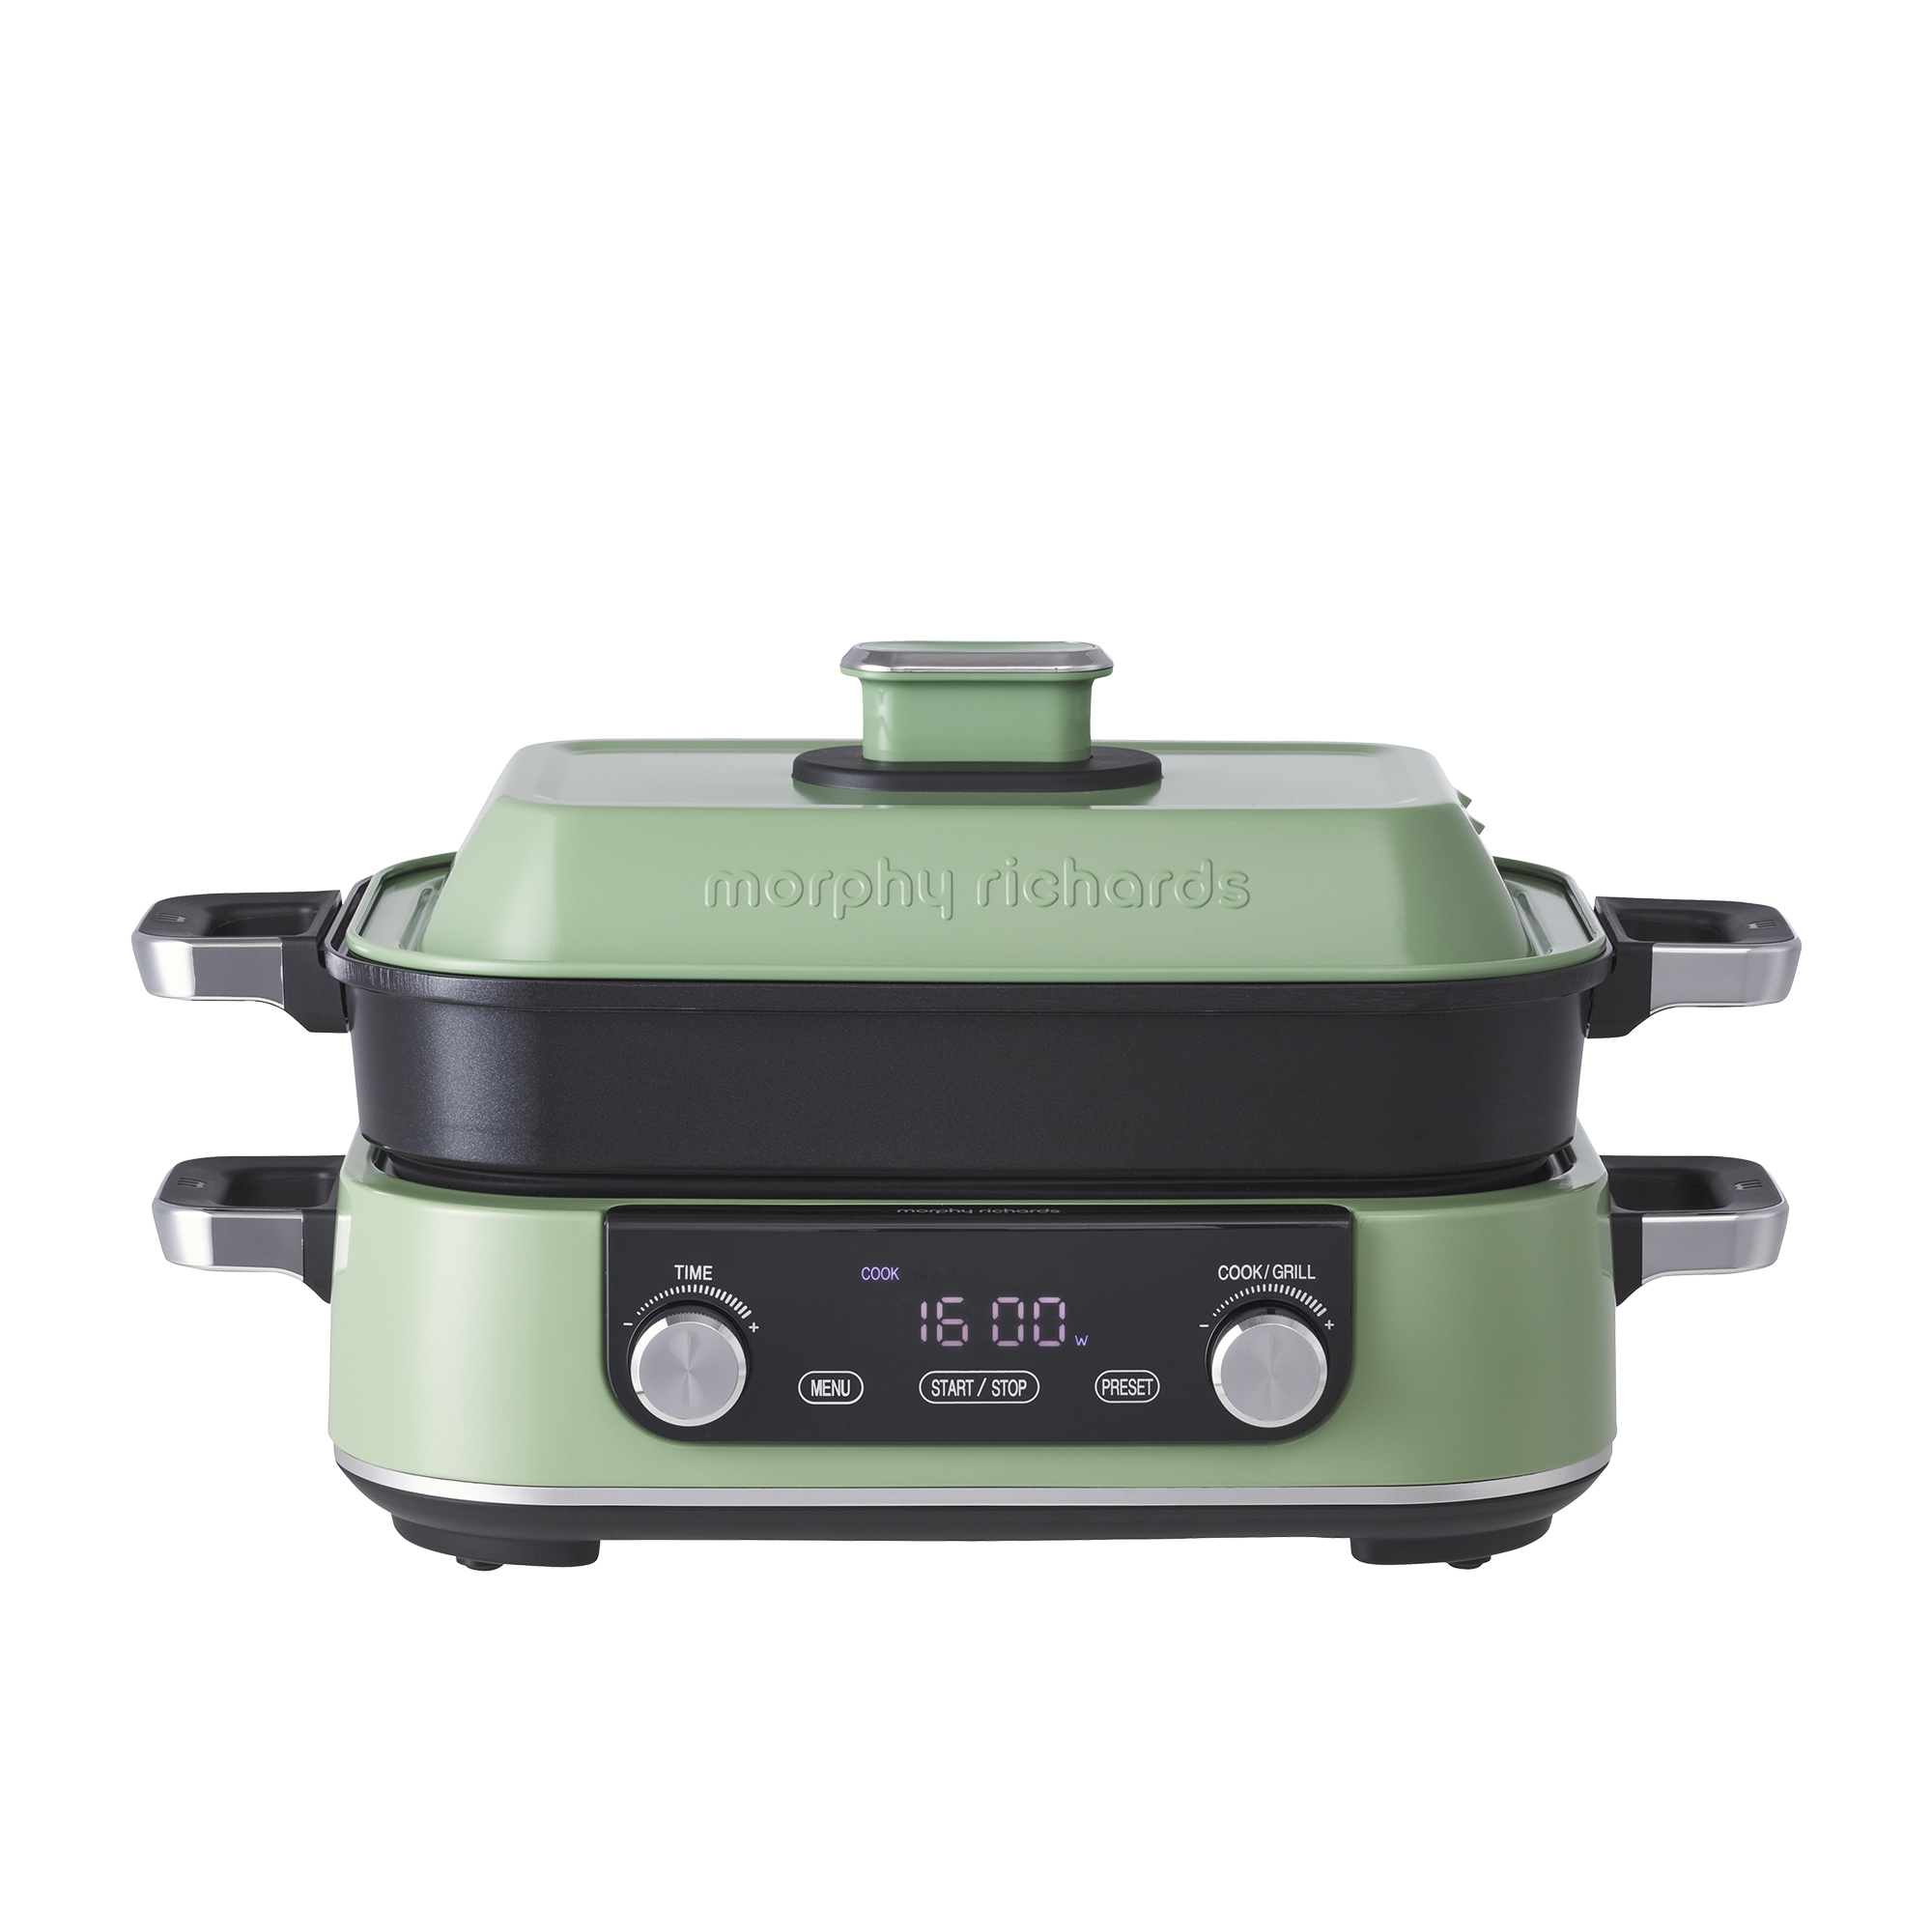 Morphy Richards Digital Multifunction Cooking Pot Green Image 1